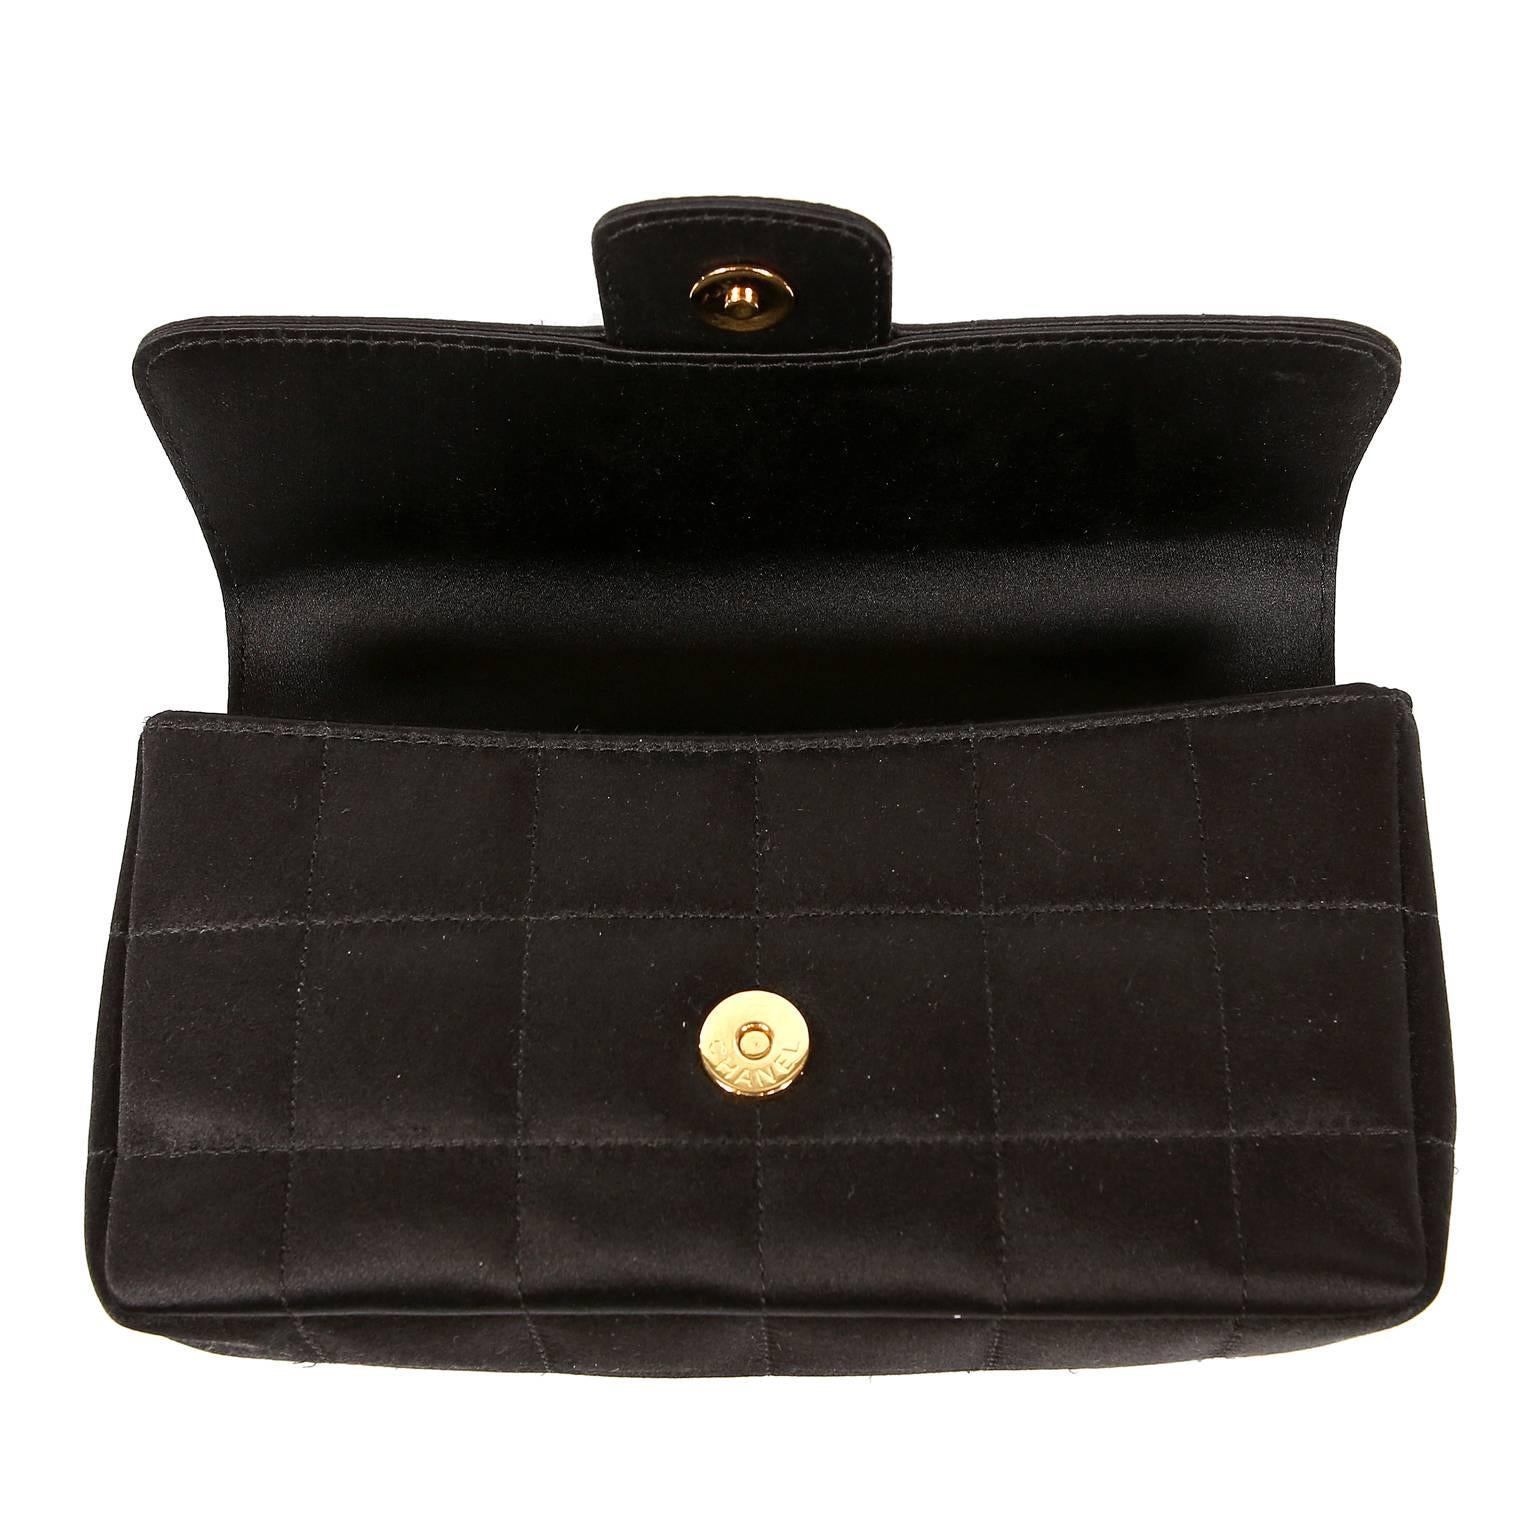 Chanel Black Satin Camellia Cross Body Bag 1